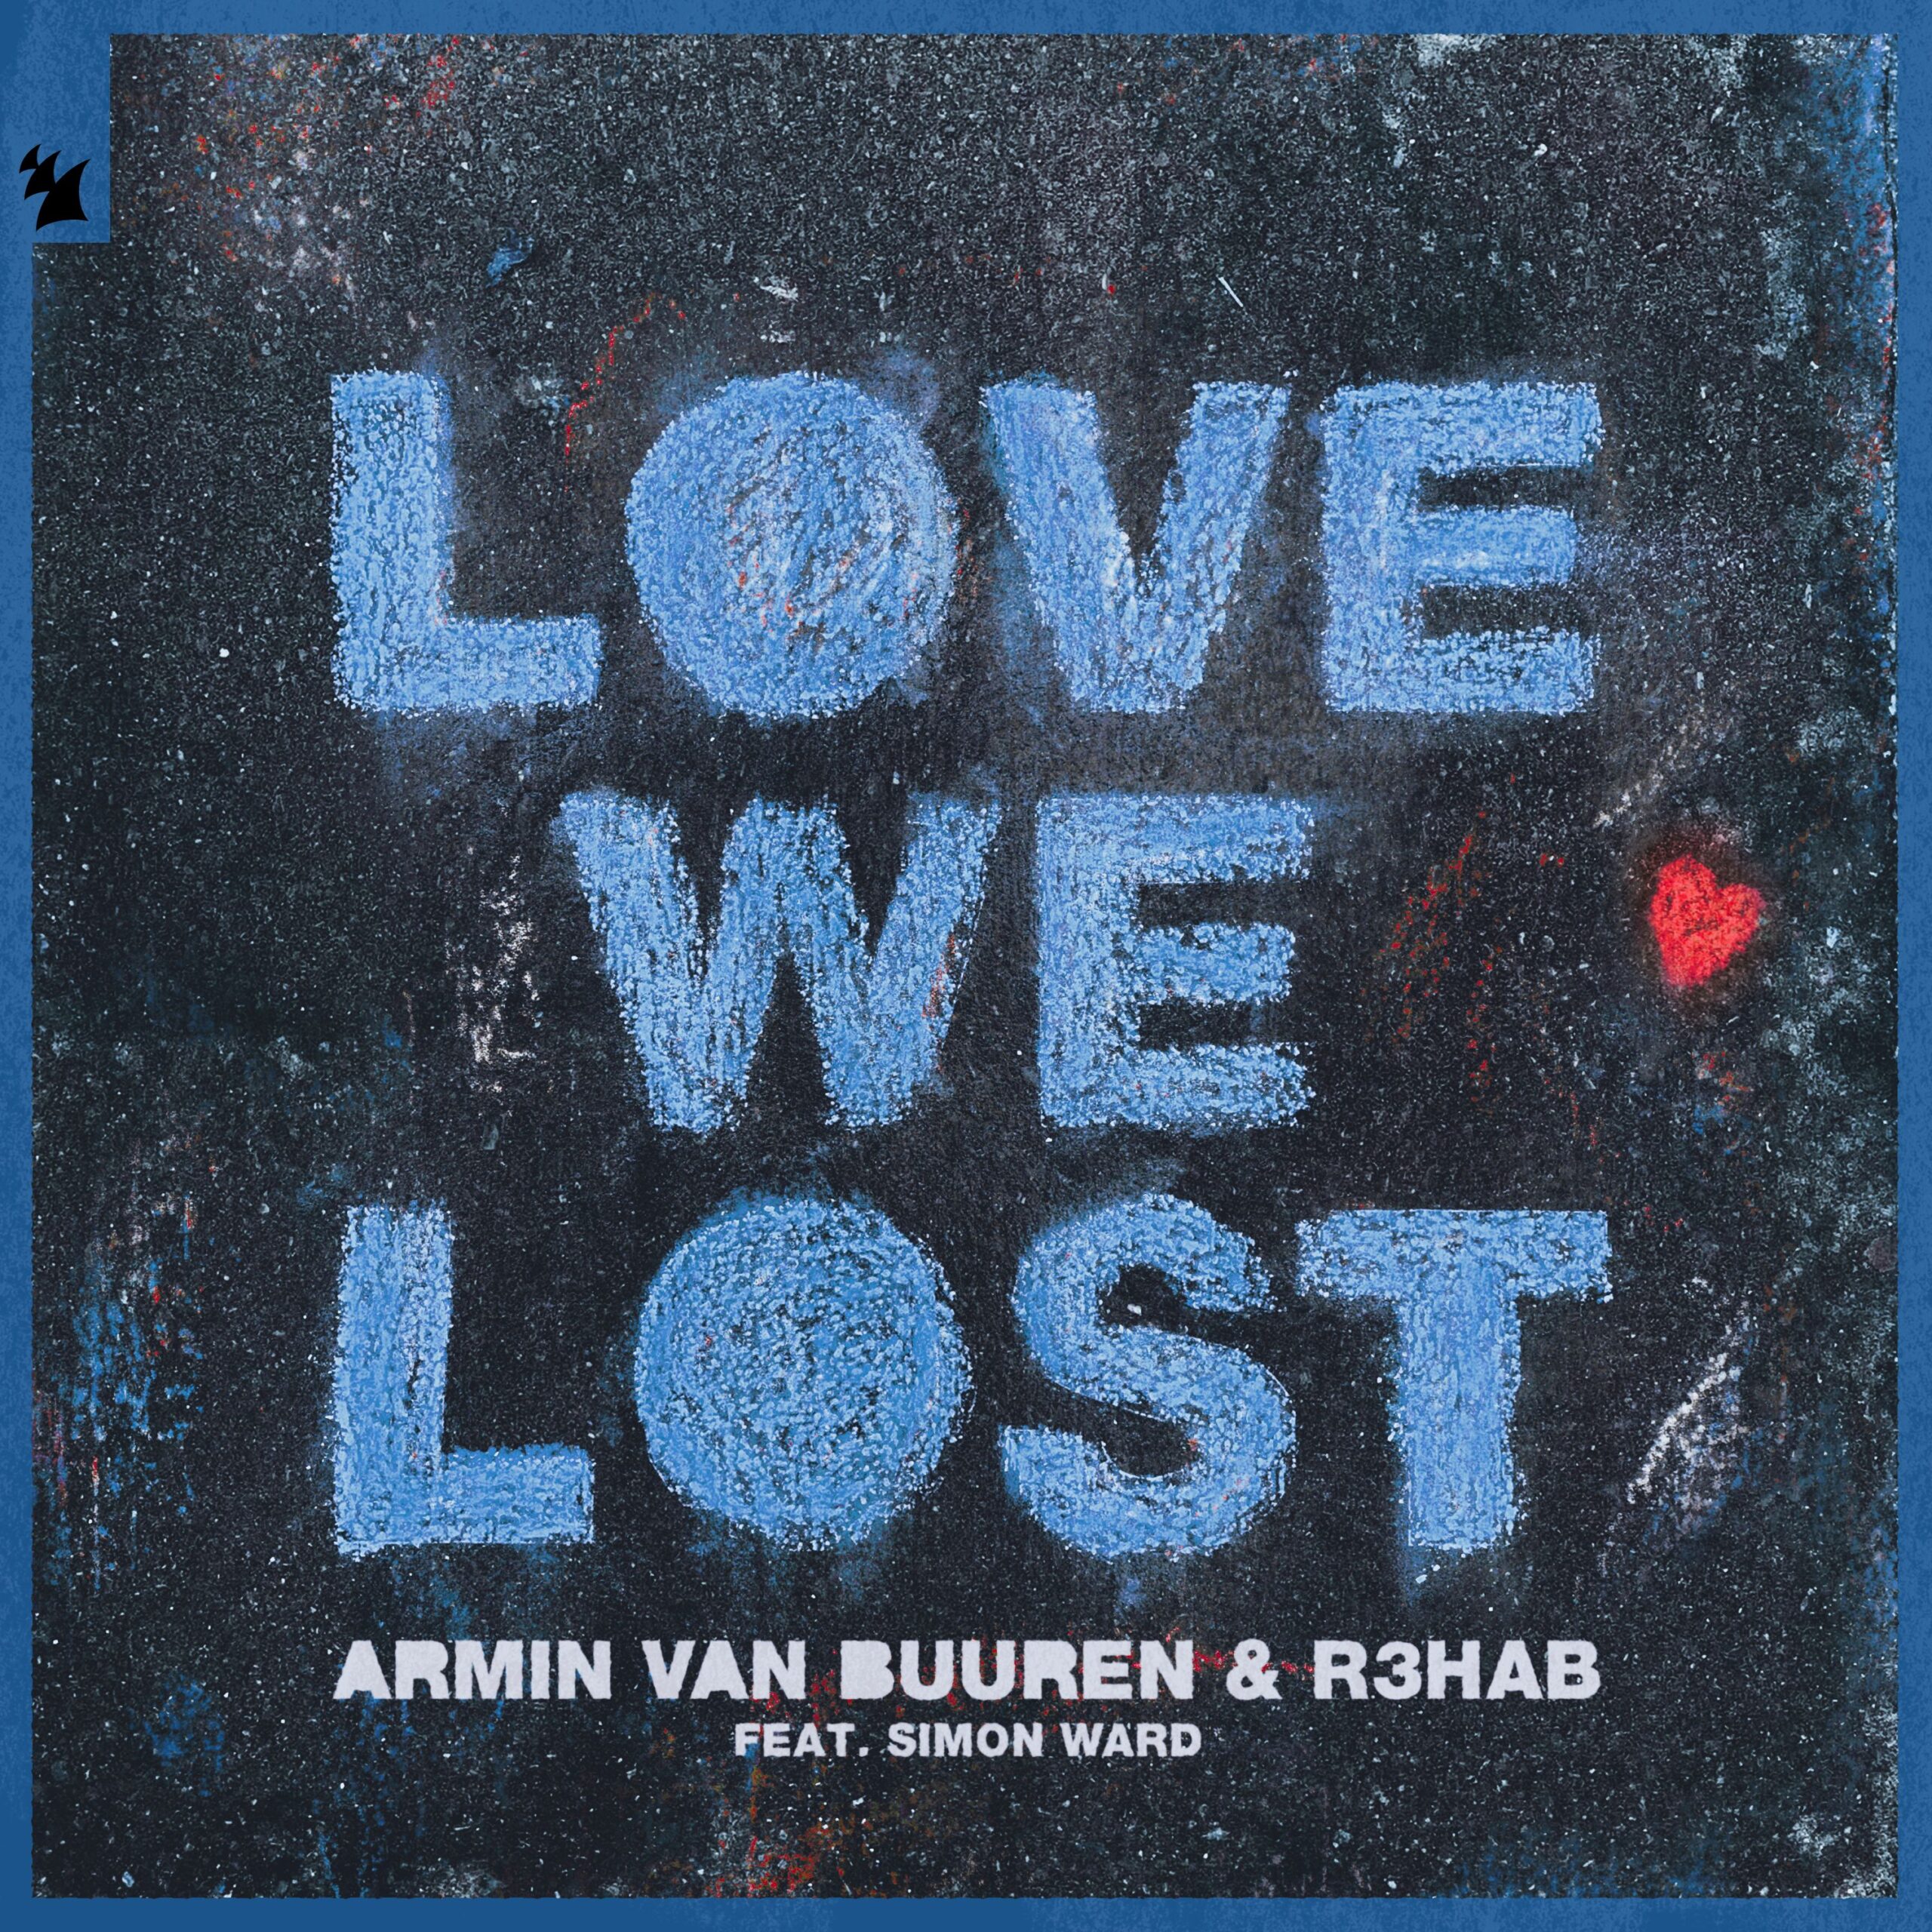 Armin van Buuren and R3HAB feat. Simon Ward presents Love We Lost on Armada Music